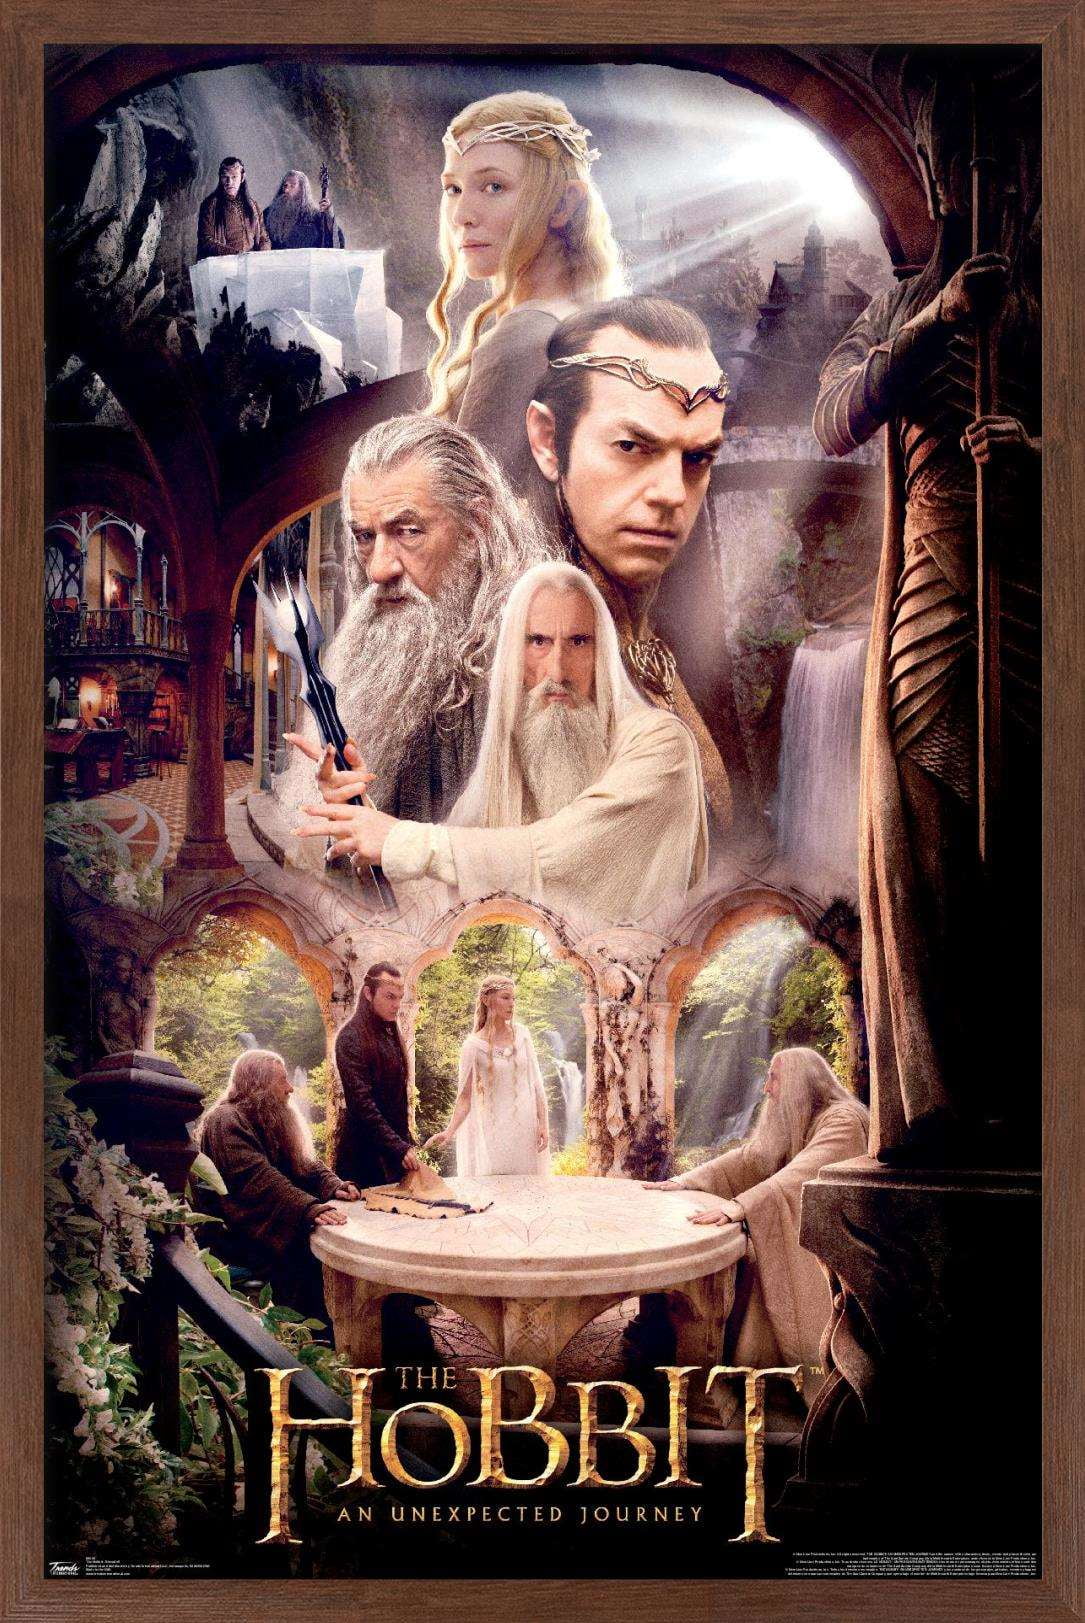 The Hobbit: An Unexpected Journey - Gollum Wall Poster, 22.375 x